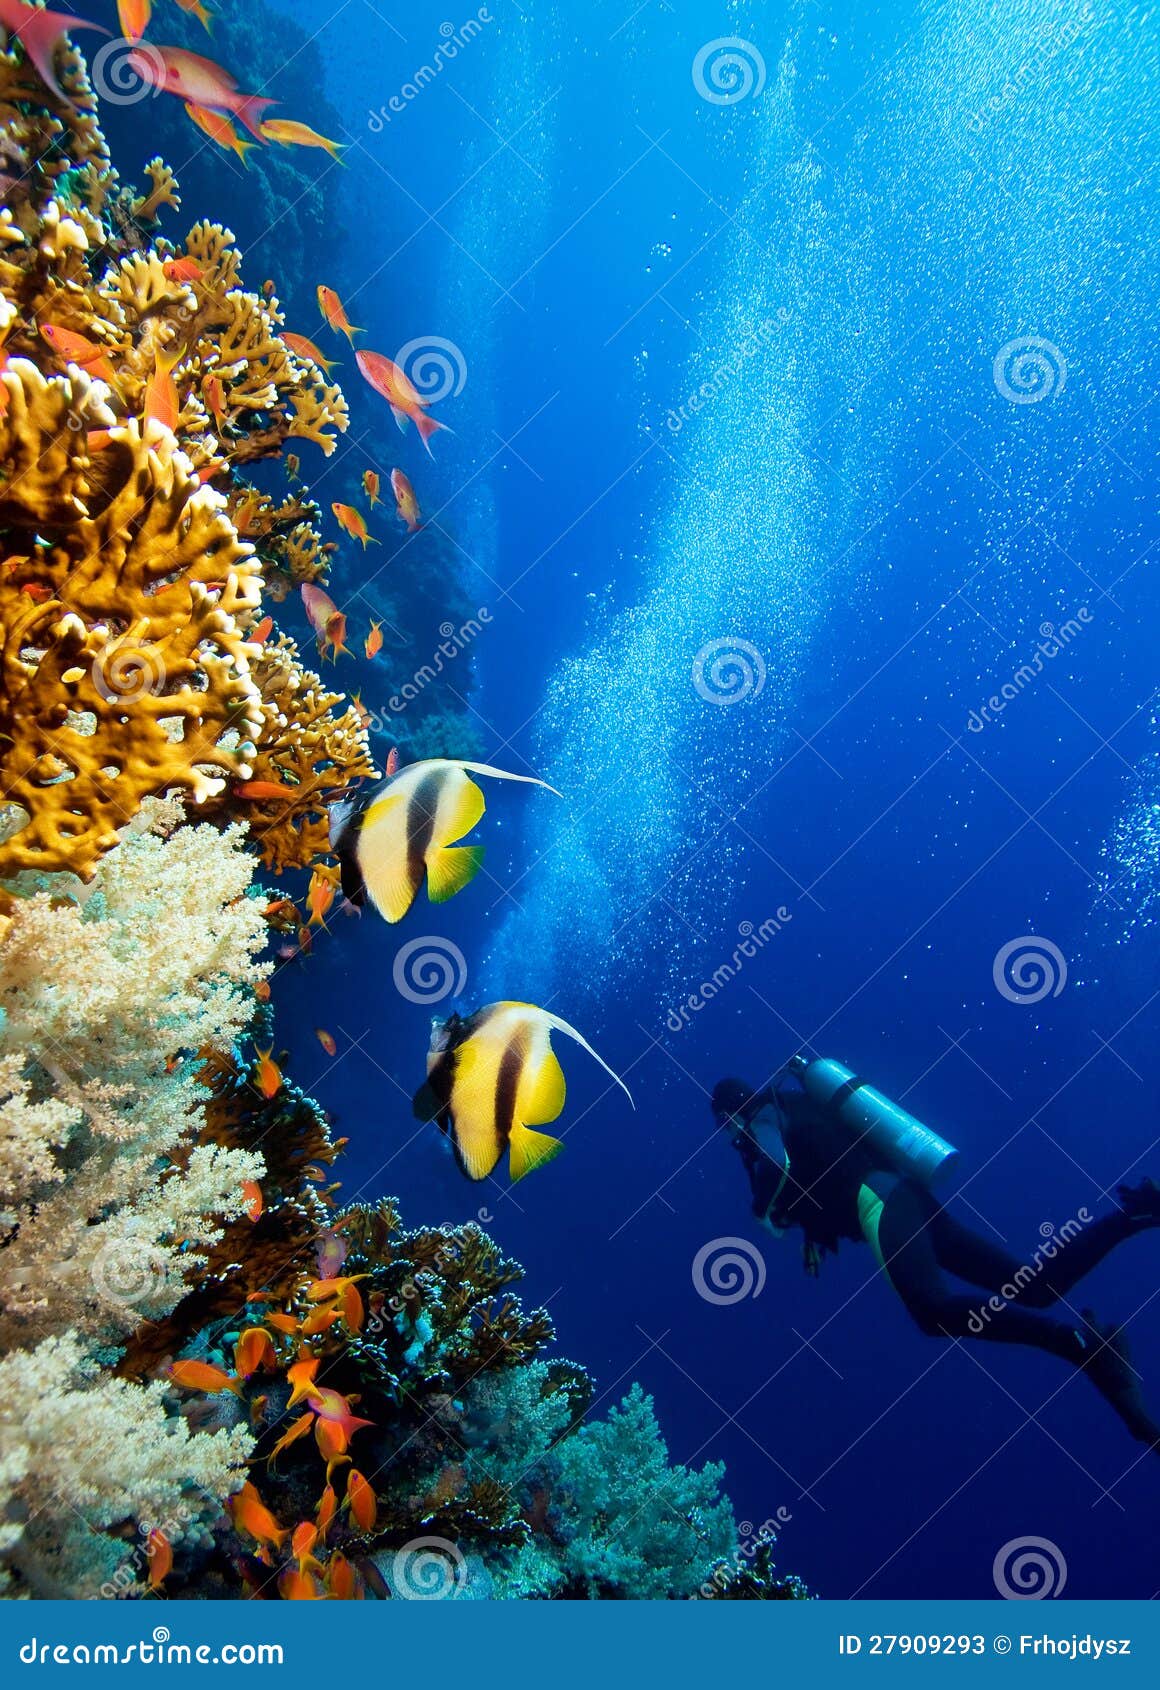 Underwater life stock image. Image of reef, butterflyfish - 27909293